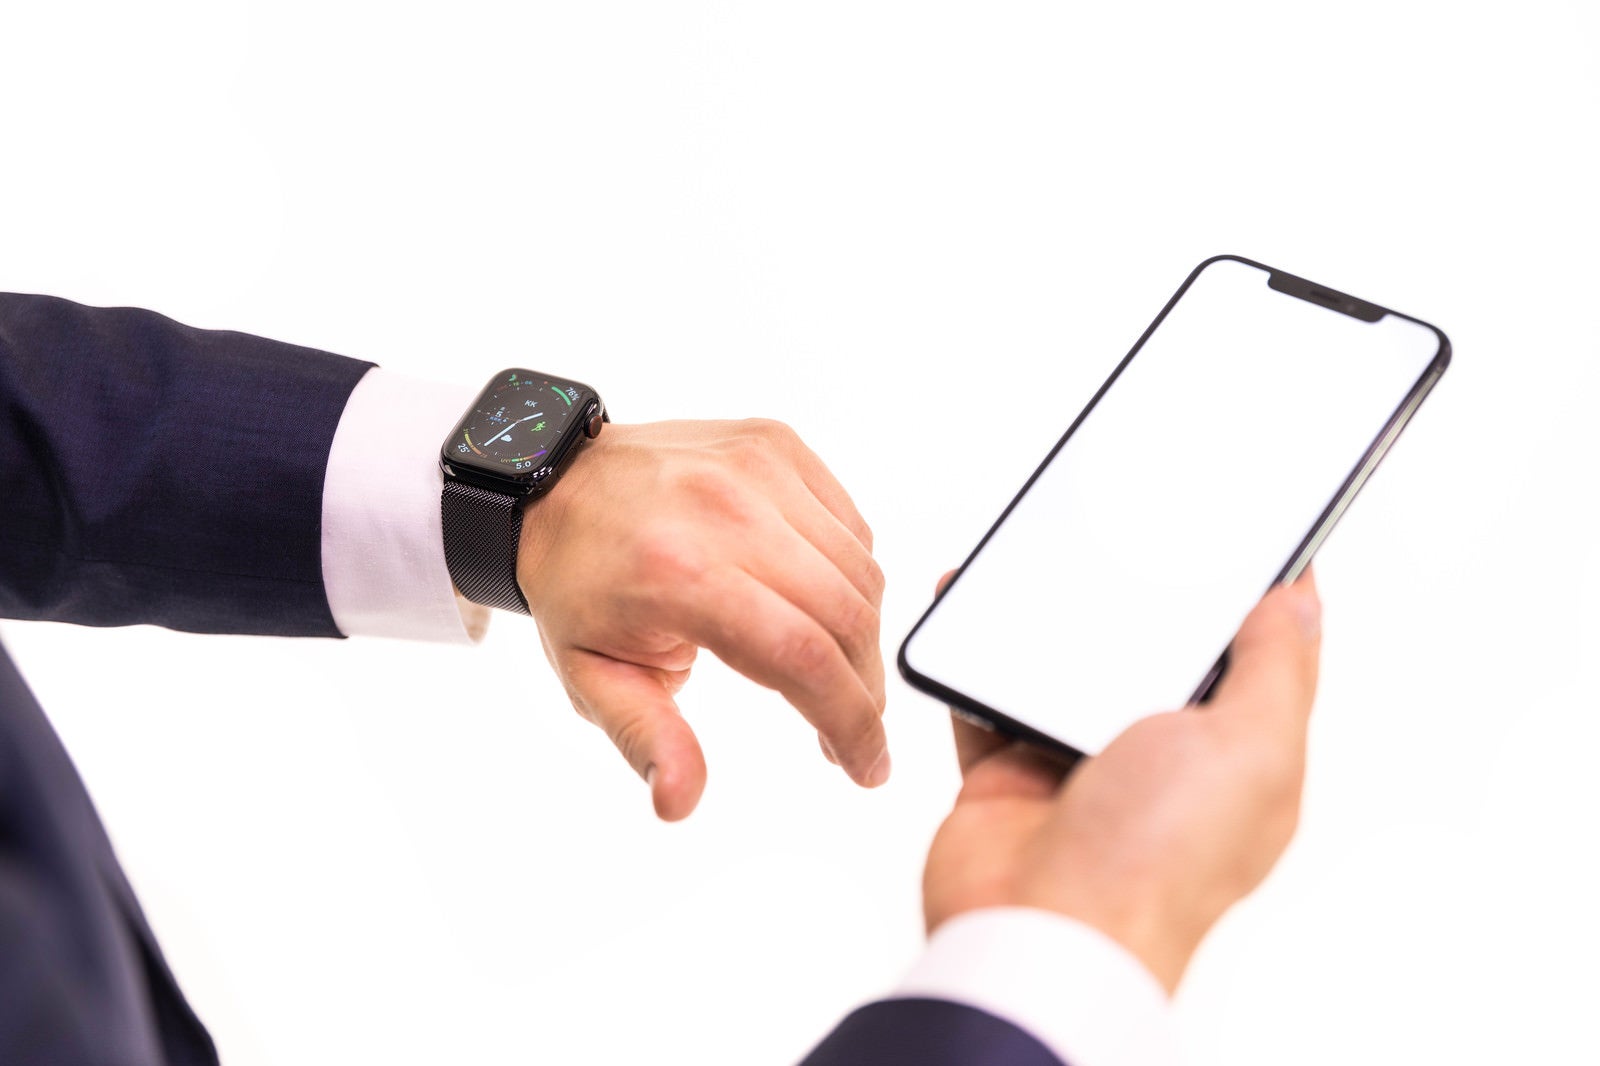 「Apple Watch Series 4 と iPhone XS を使う手元」の写真